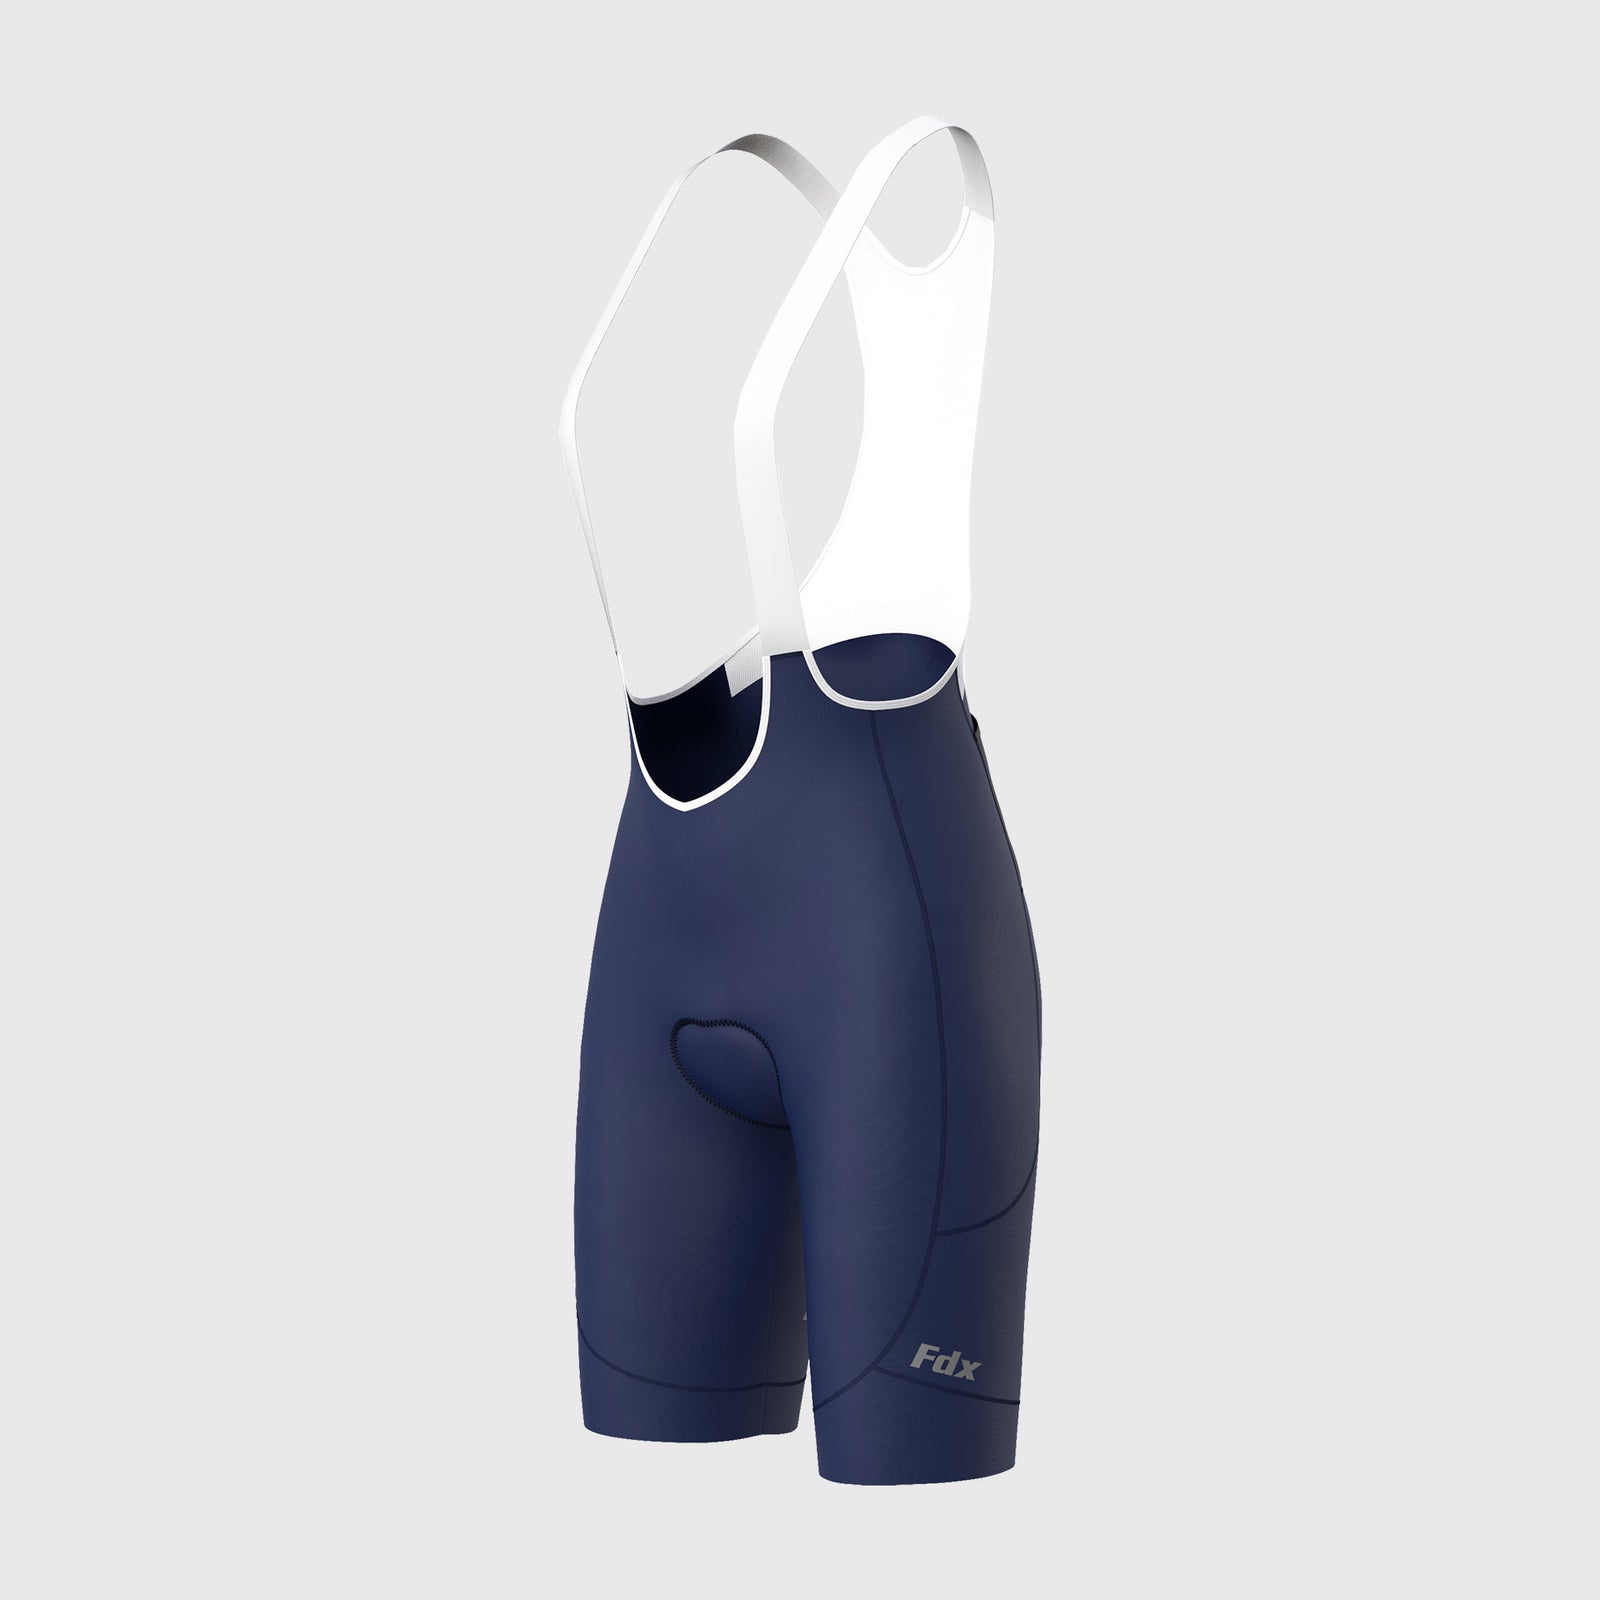 Fdx Womens Blue Gel Padded Cycling Bib Shorts For Summer Best Breathable Outdoor Road Bike Short Length Bib - Duo